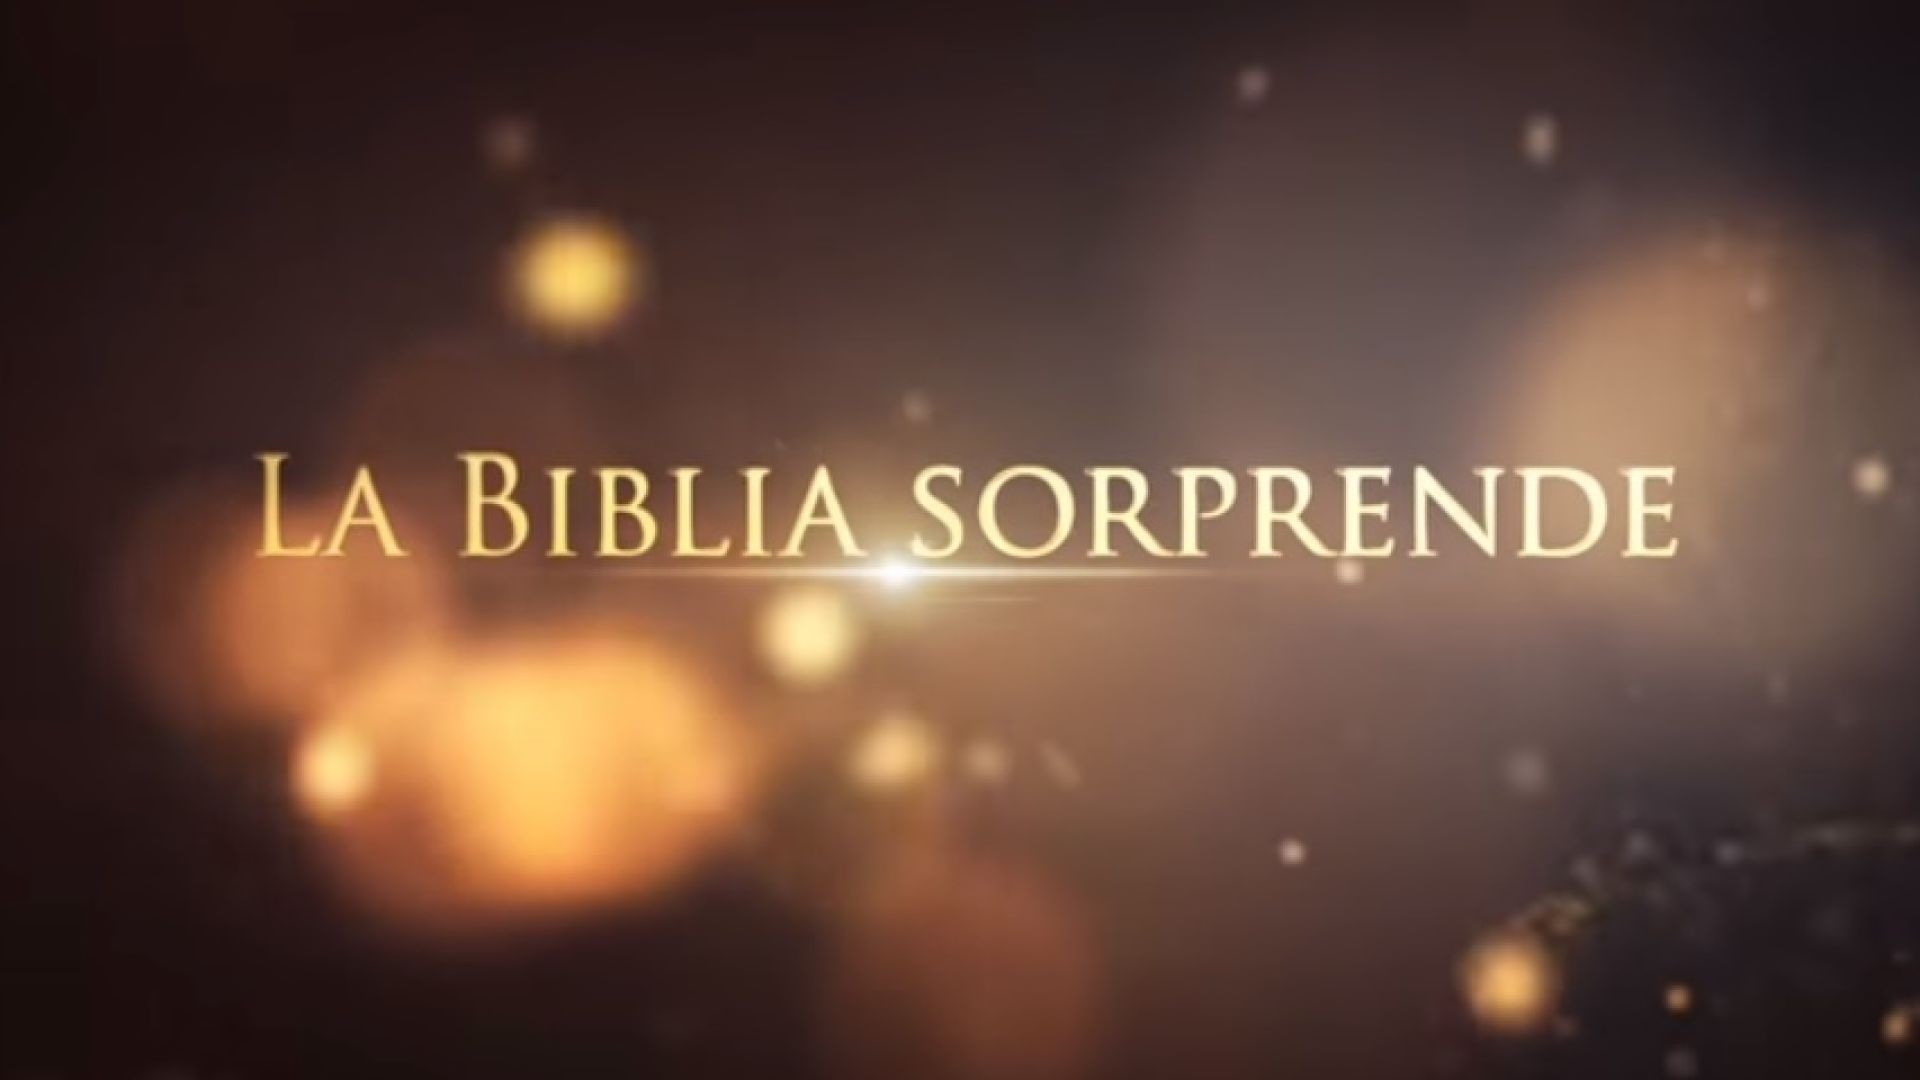 11 La profecía definitiva | La Biblia Sorprende 1ra temporada - Juan Surroca